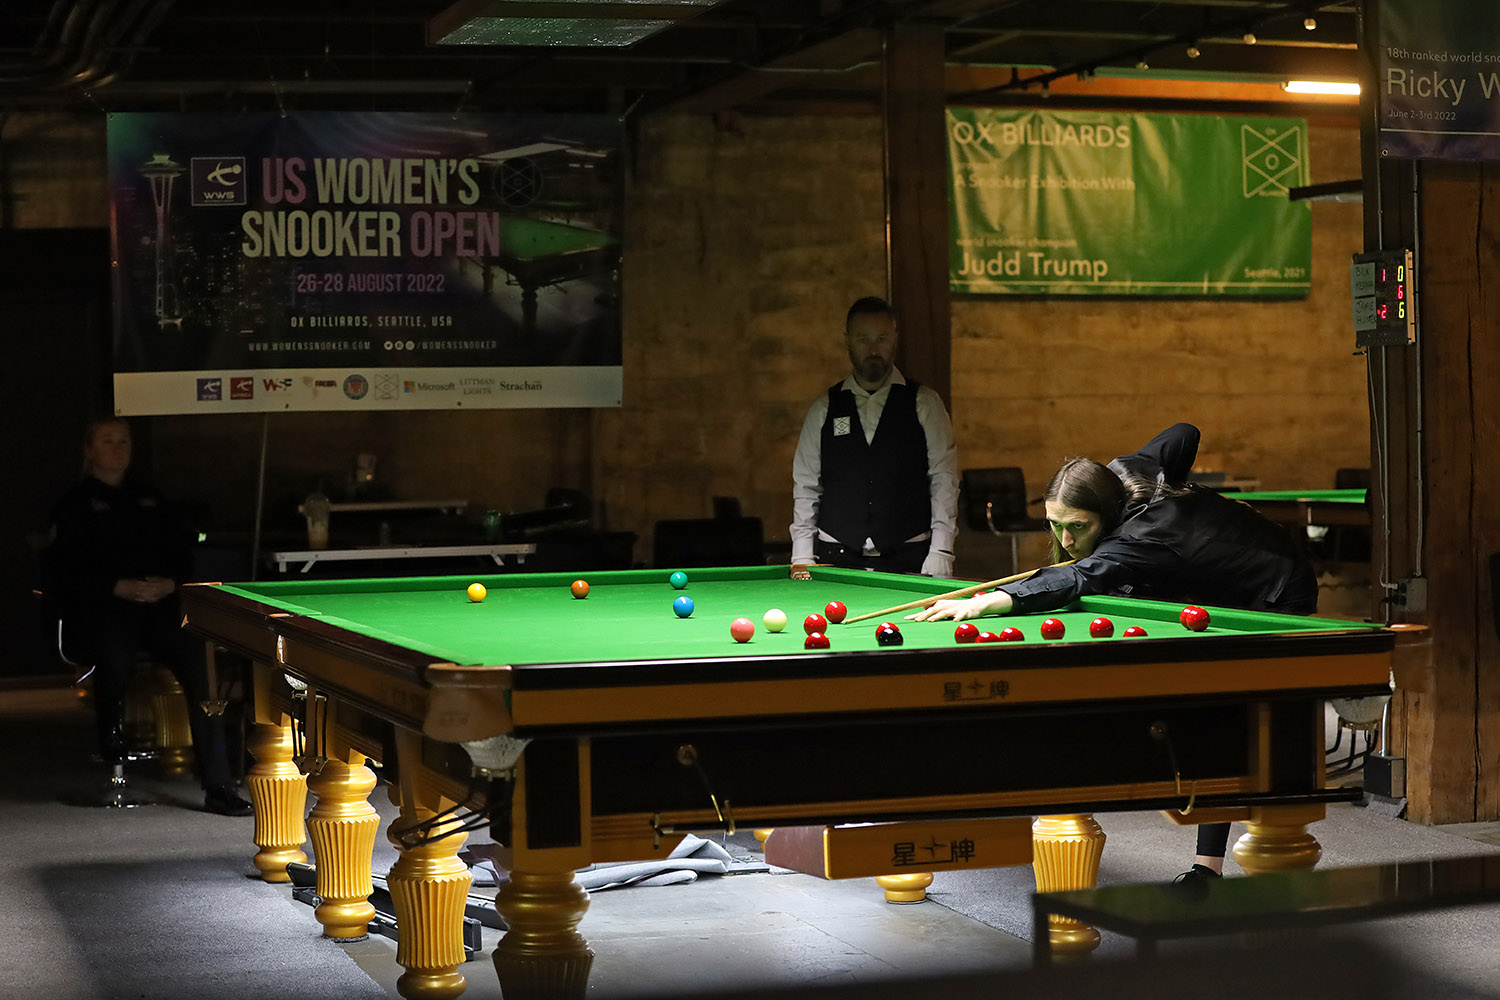 WPBSA SnookerScores - 2023 World Women's Snooker Championship